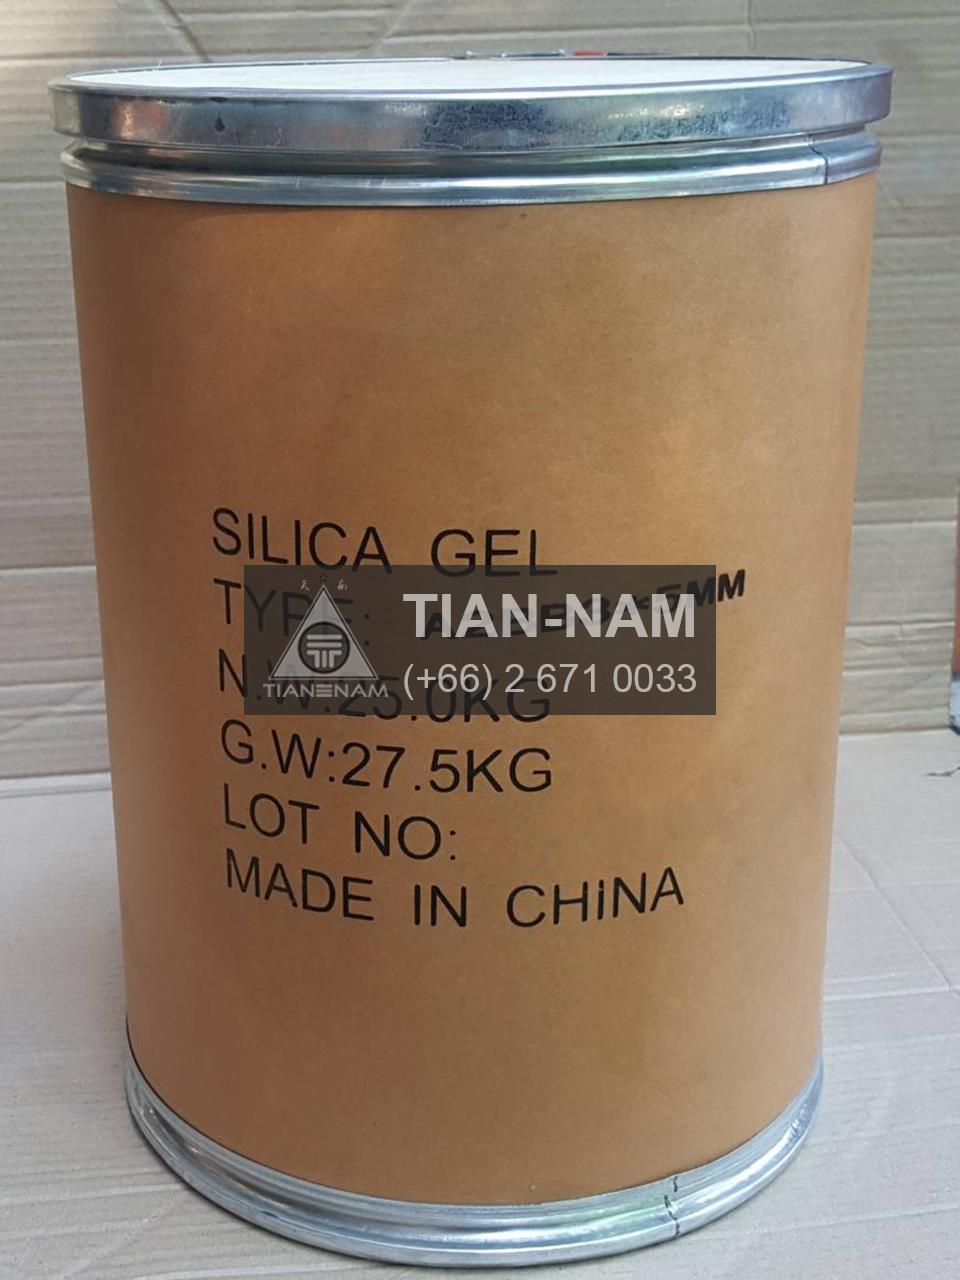 Silica Gel (Blue),ซิลิกอนไดออกไซด์,  ซิลิกา,  จีน,  SiO2,  desiccant,,Chemicals/Desiccants